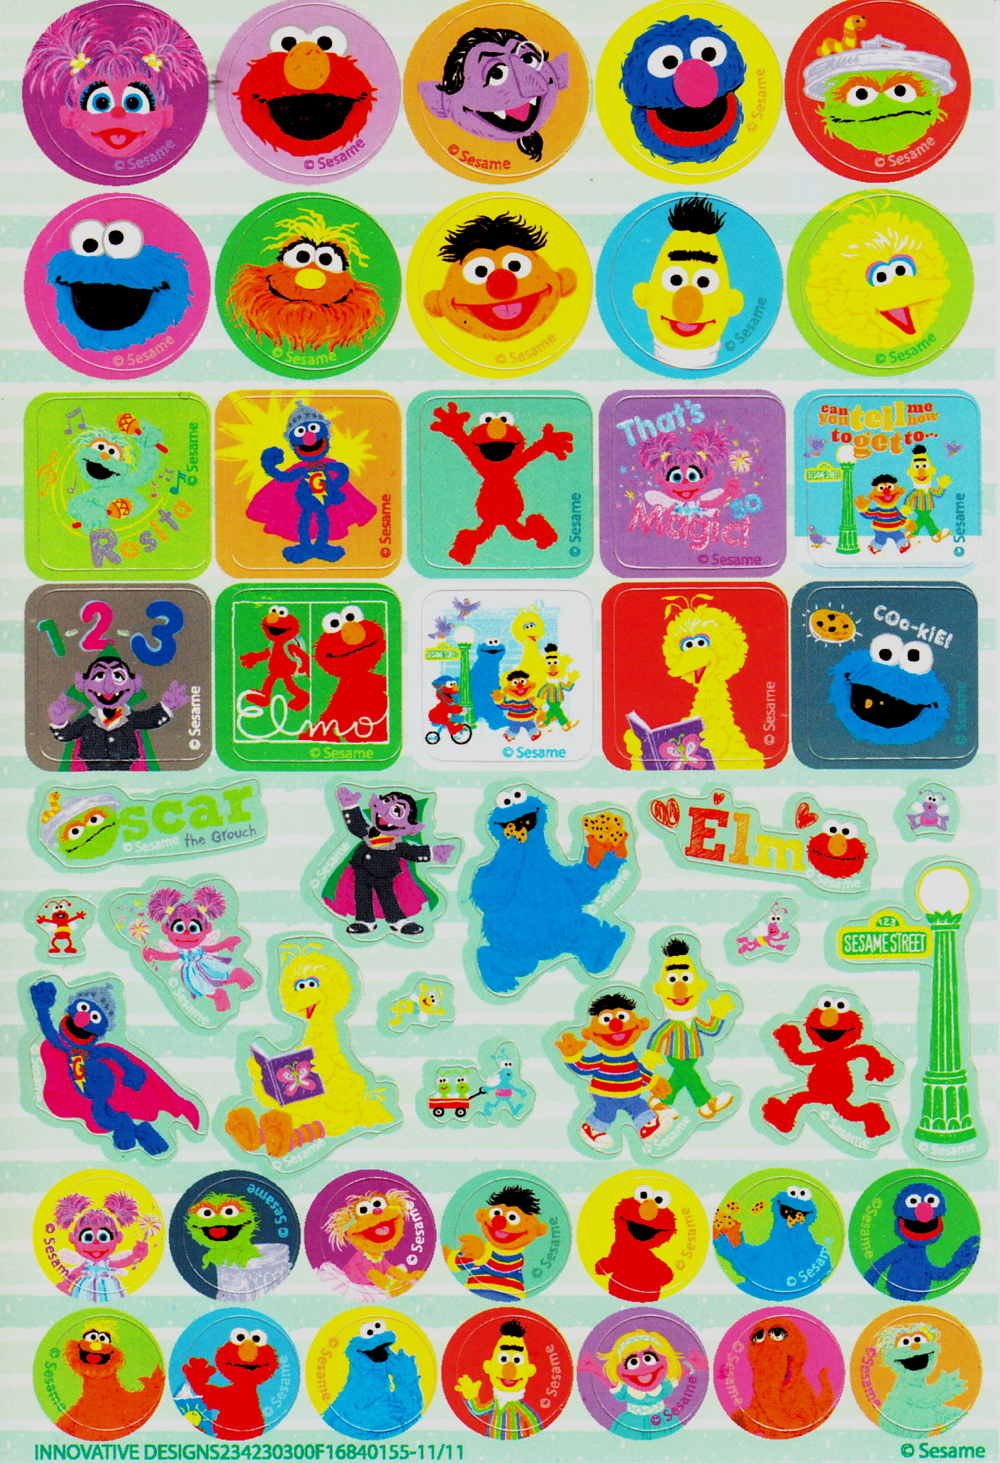  Sesame Street stickers  Innovative Designs Muppet Wiki 